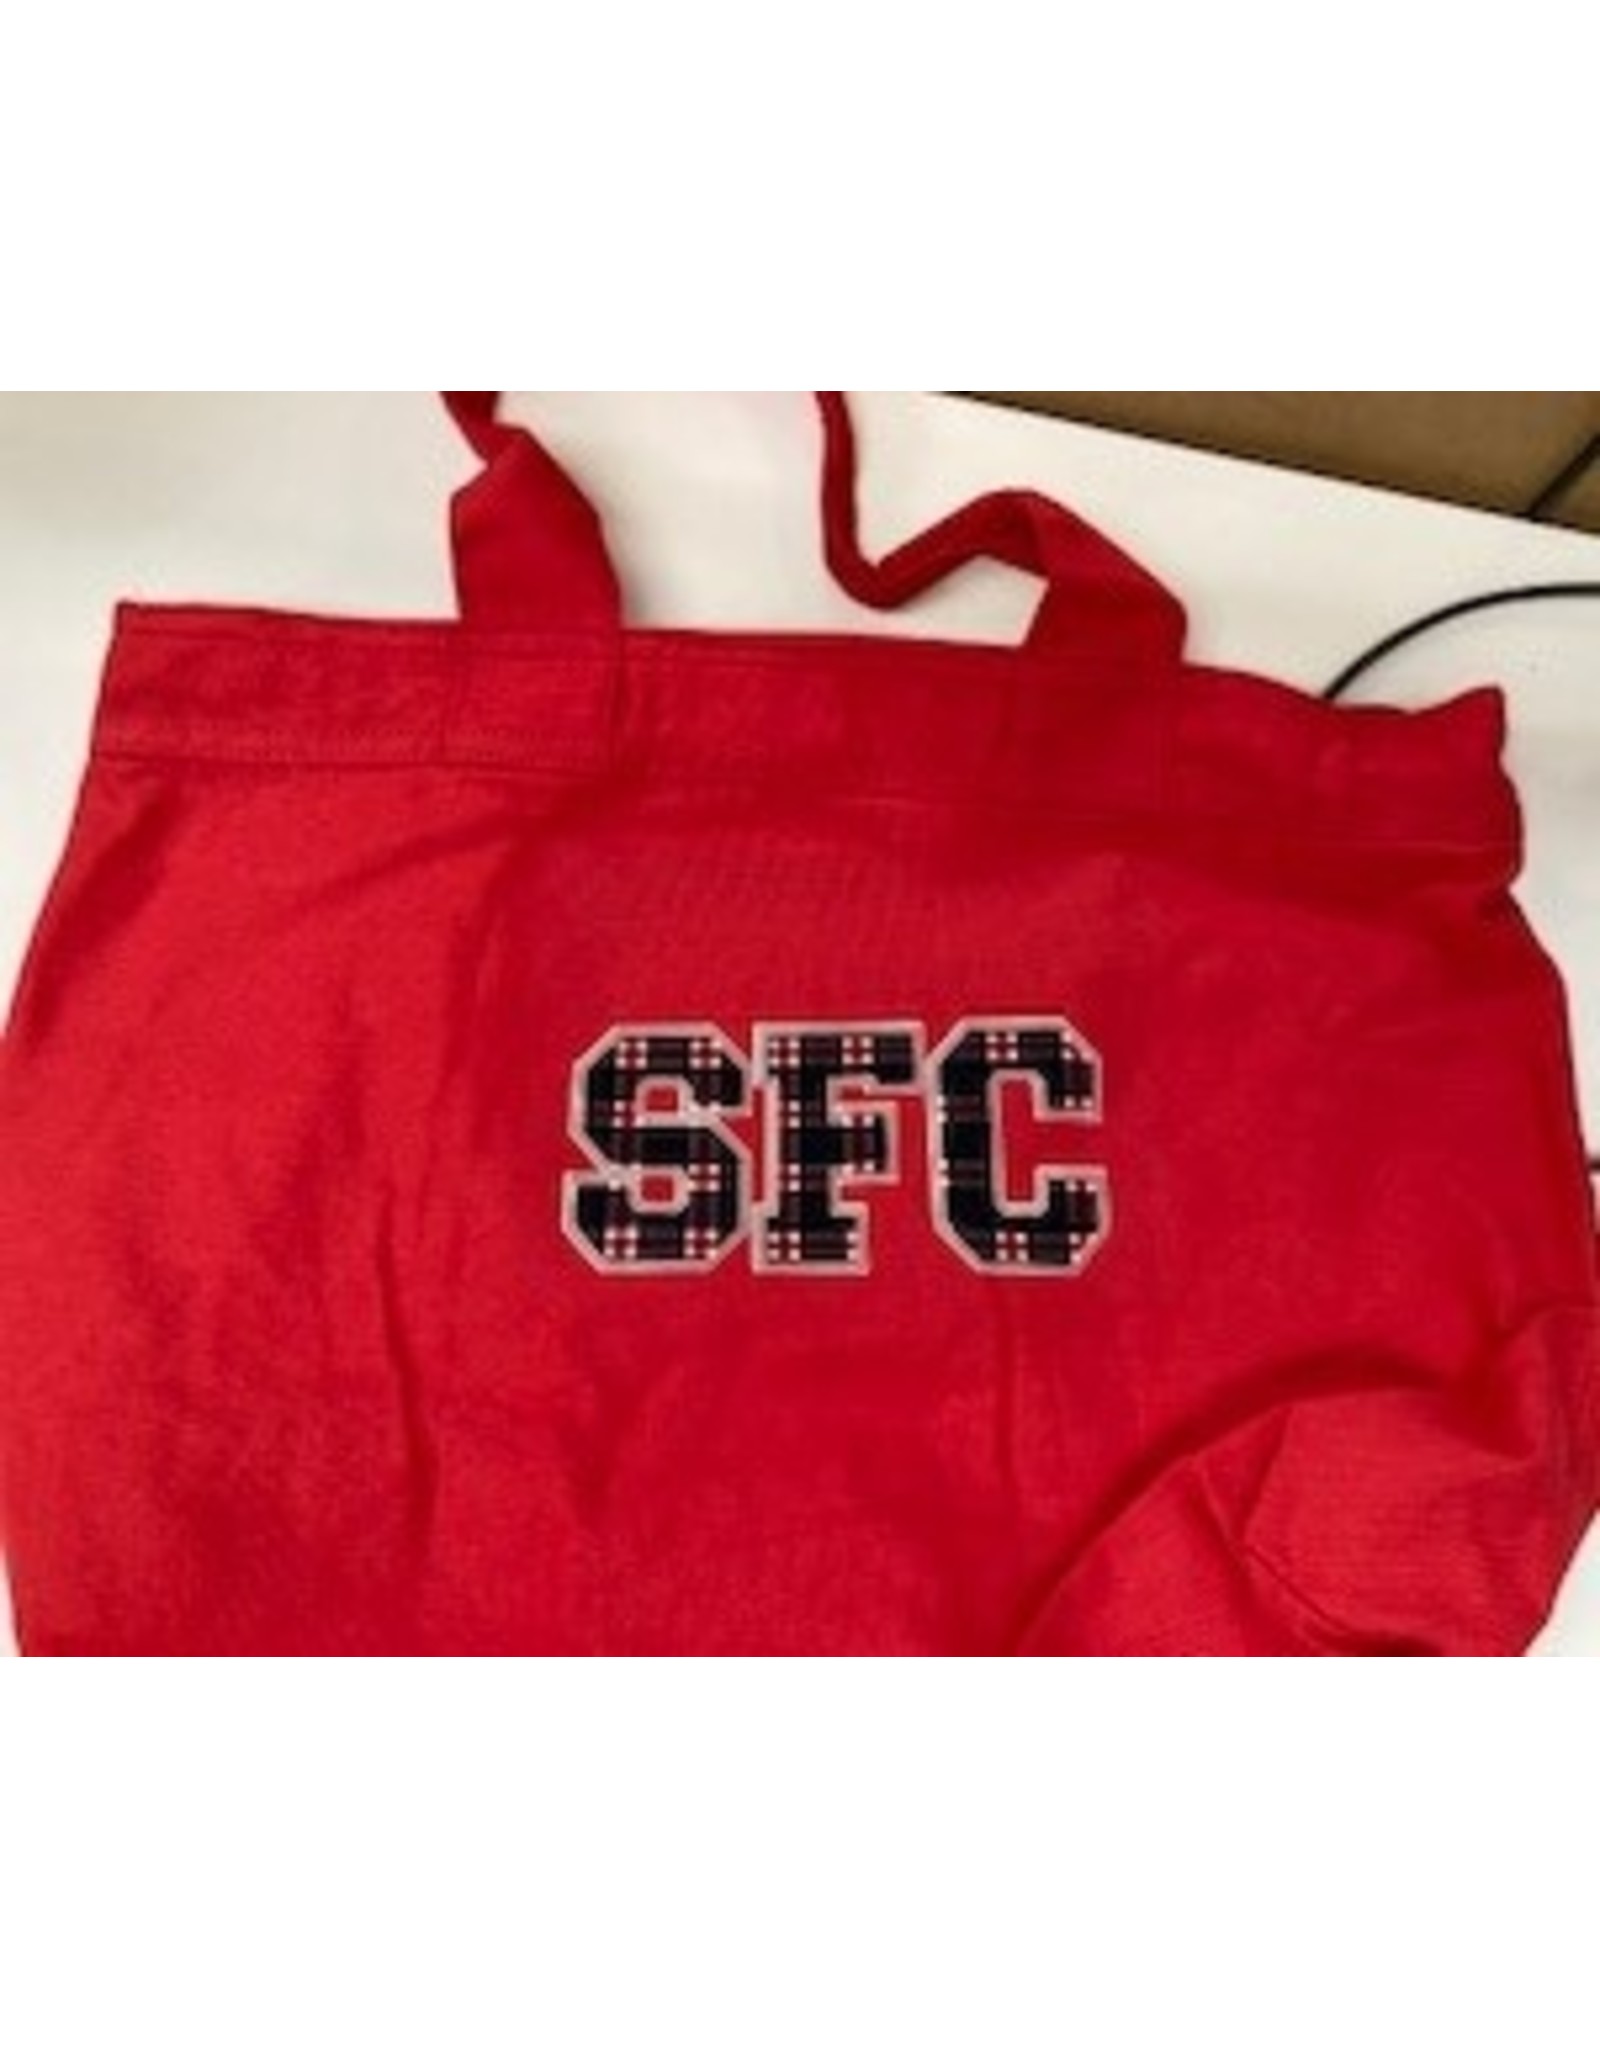 SFC RED ZIP BAG